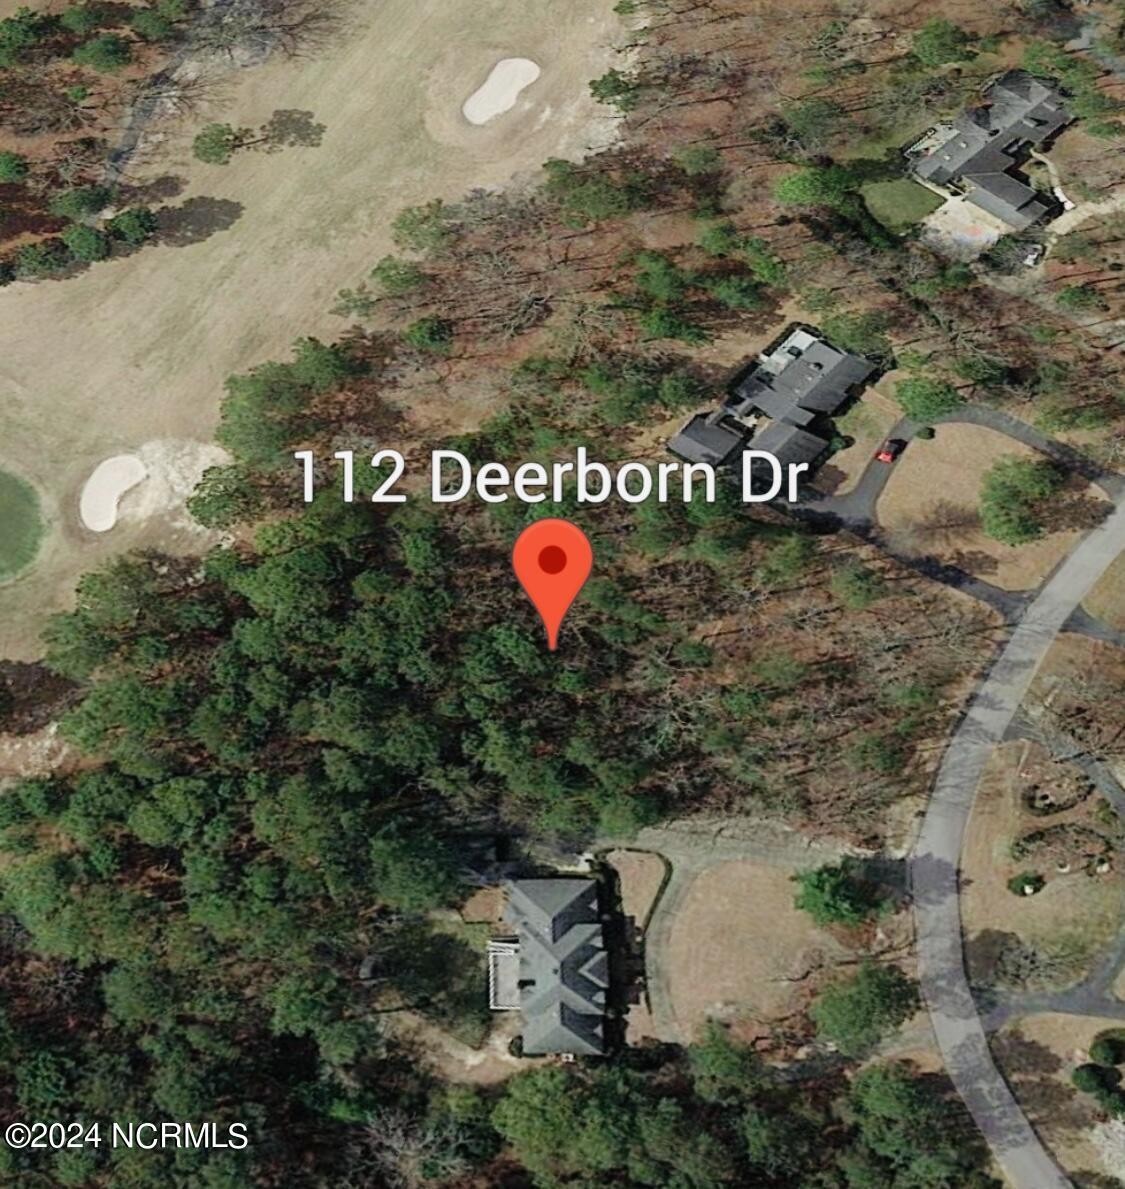 2. 112 Deerborn Drive